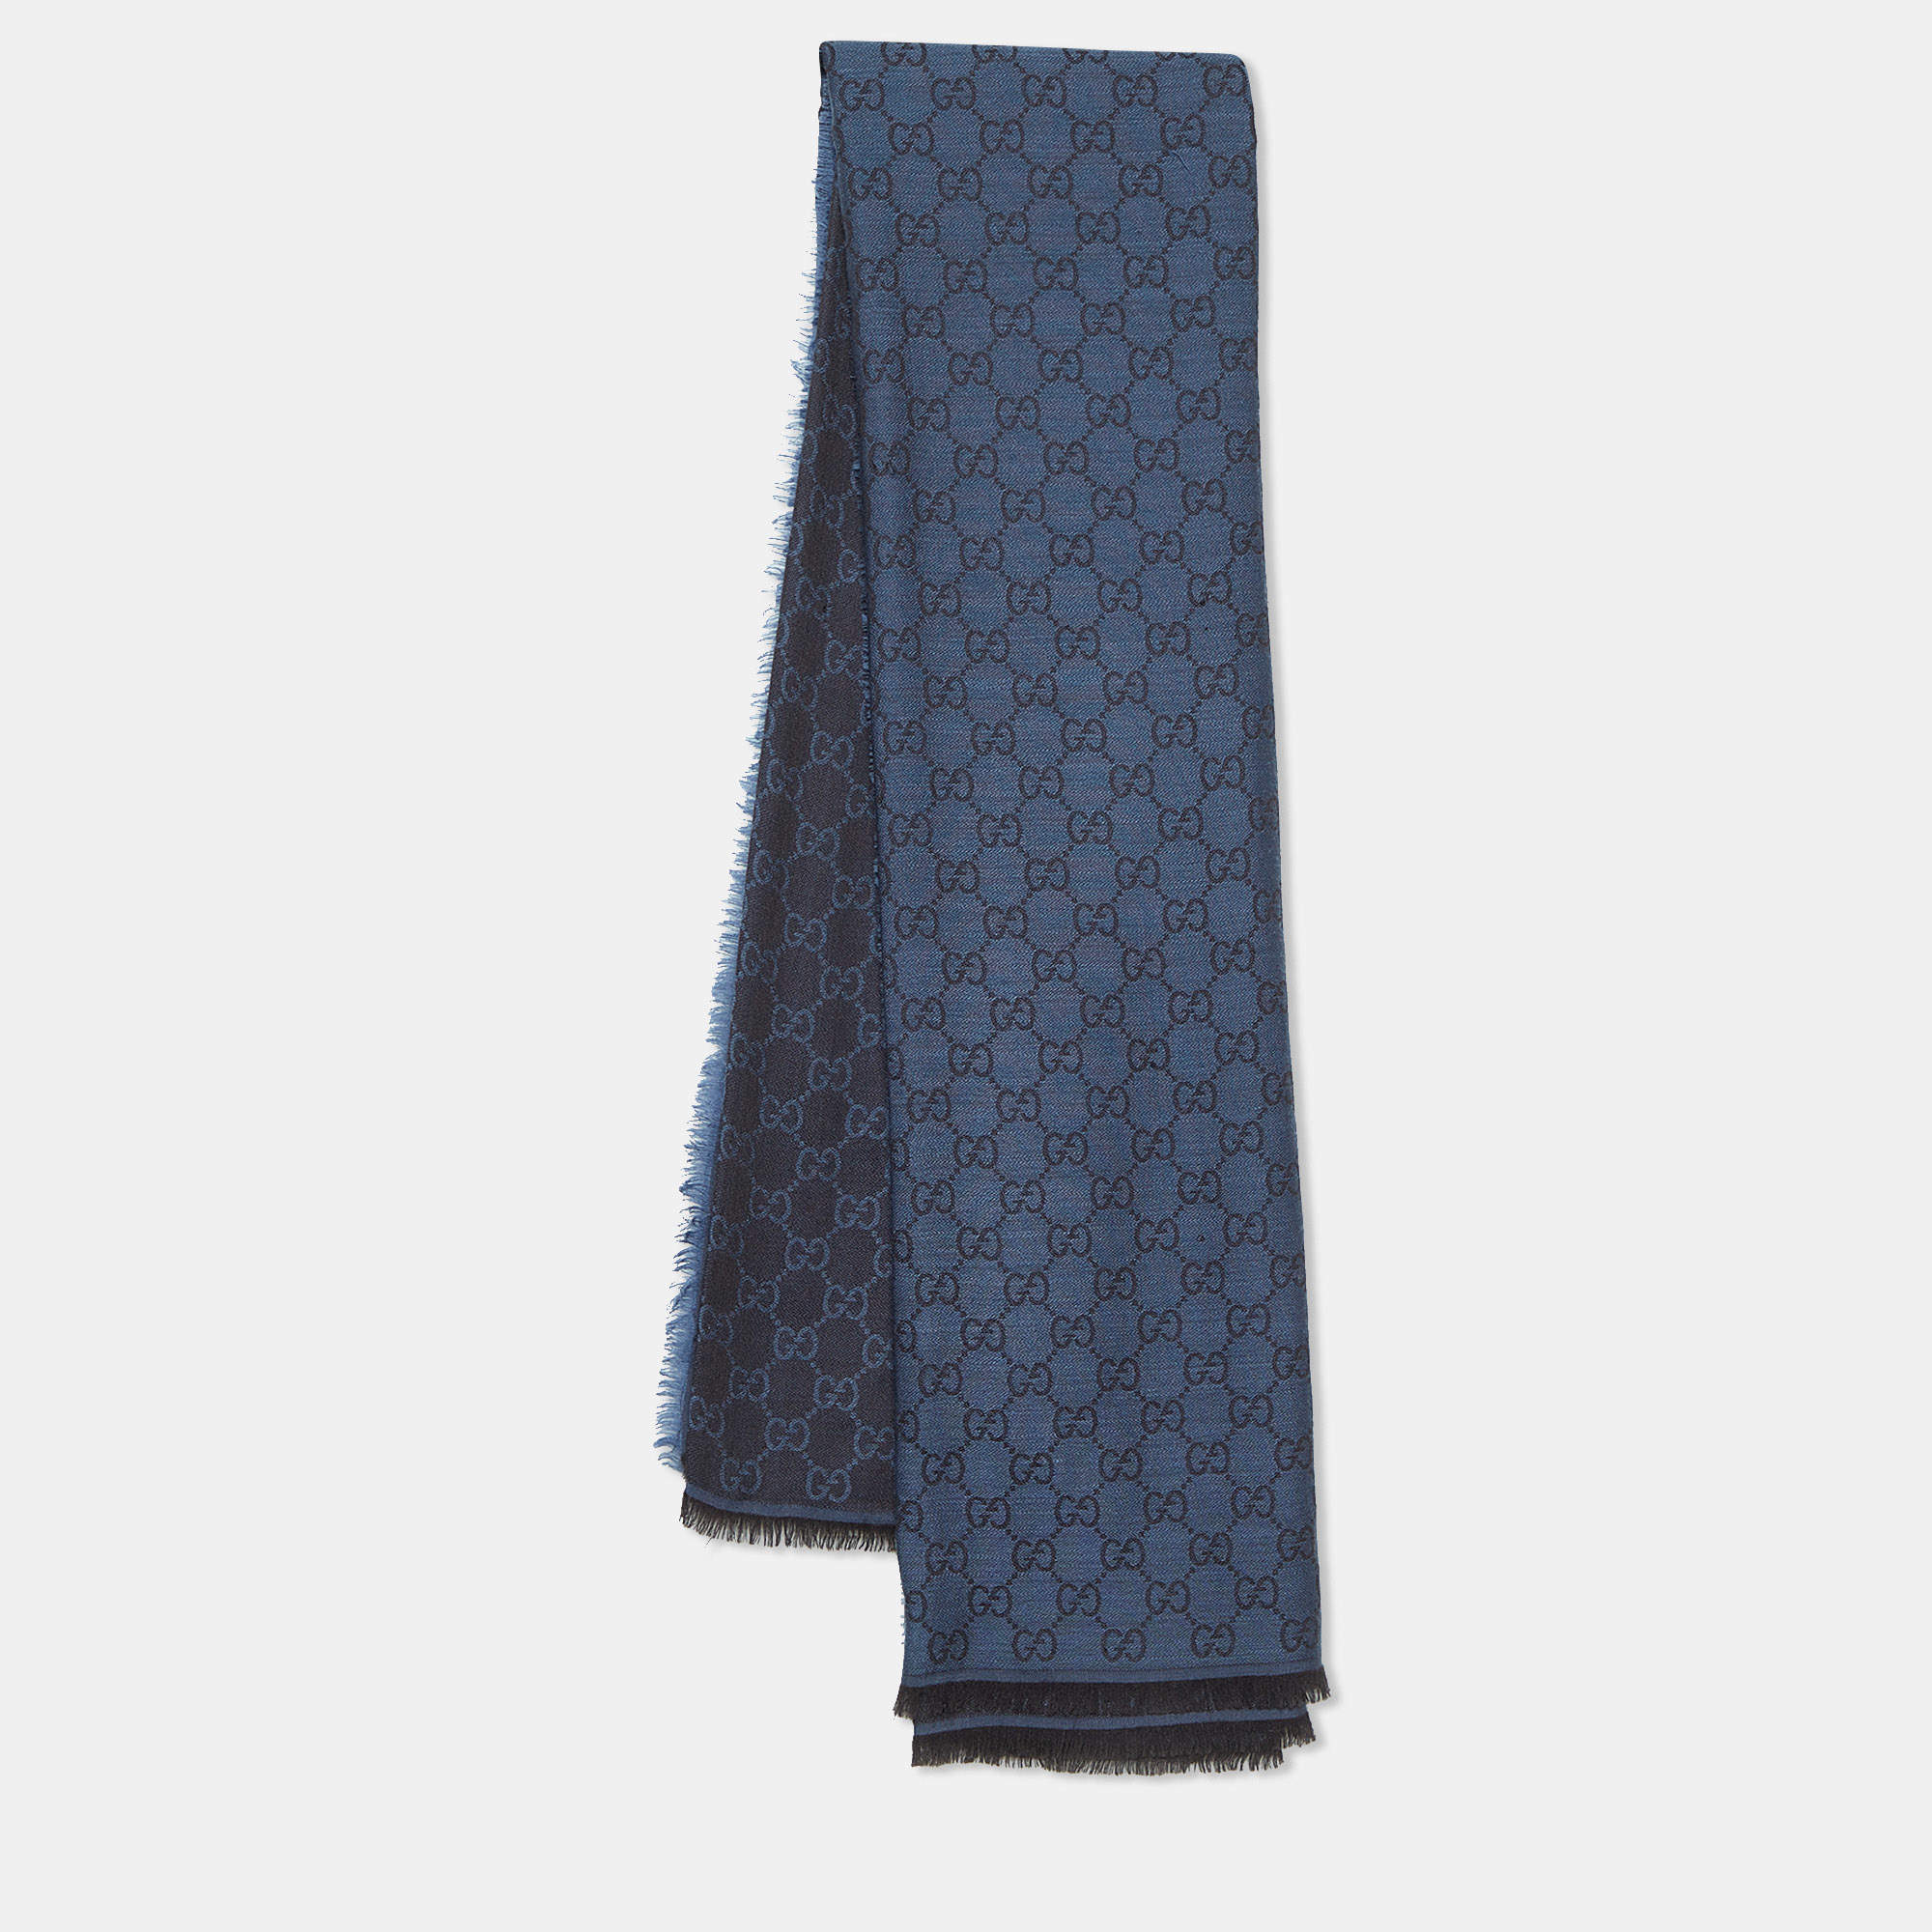 Louis Vuitton Scarf Purple Silk Wool Fringe Monogram Used Japan